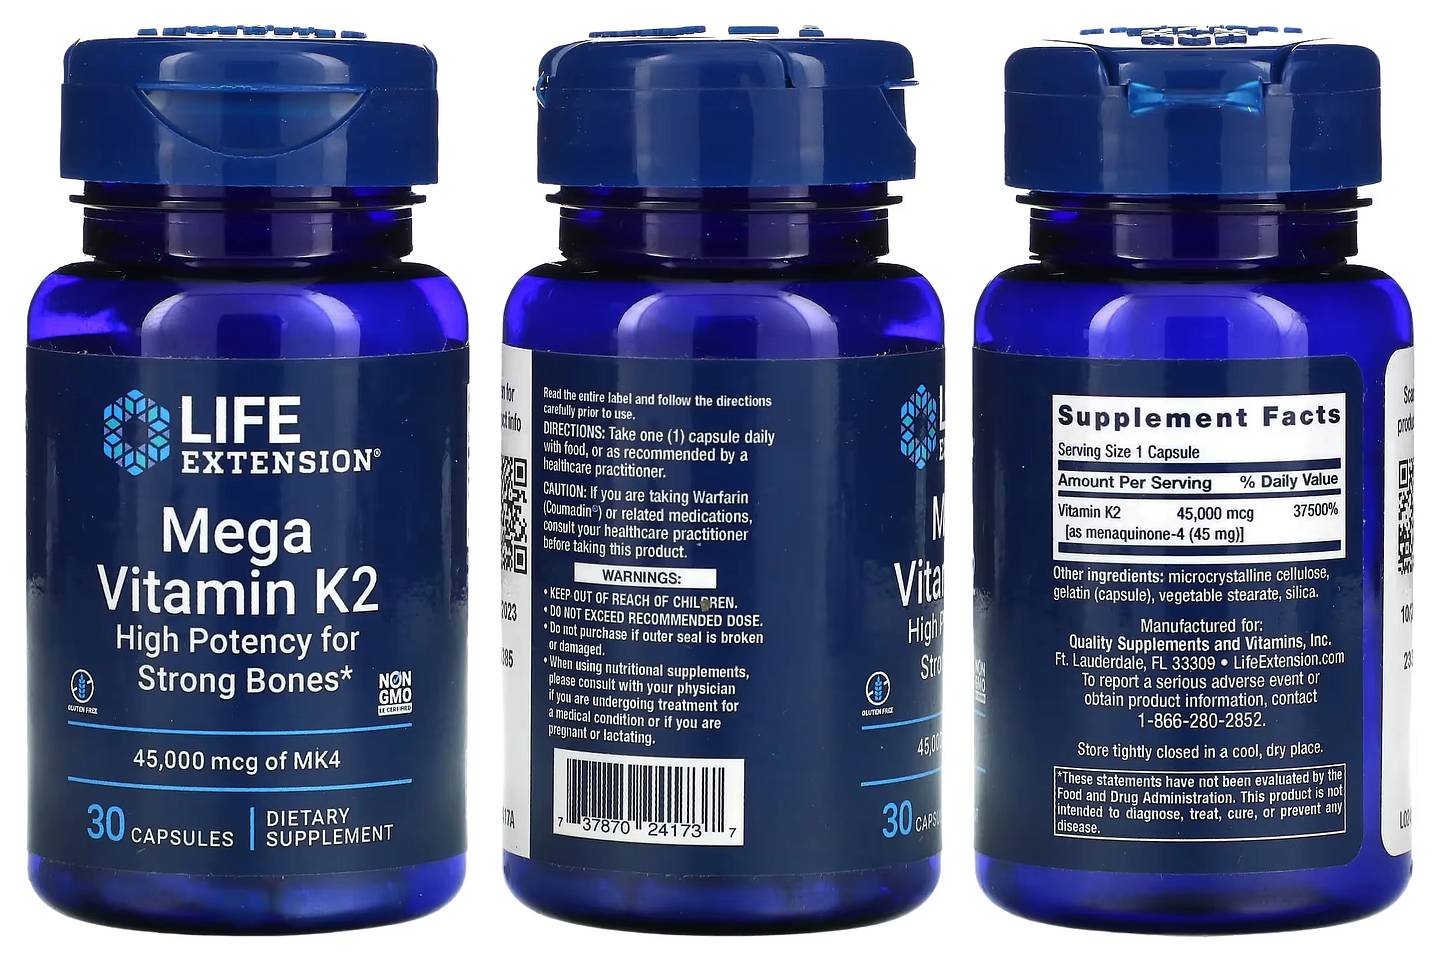 Life Extension, Mega Vitamin K2 packaging